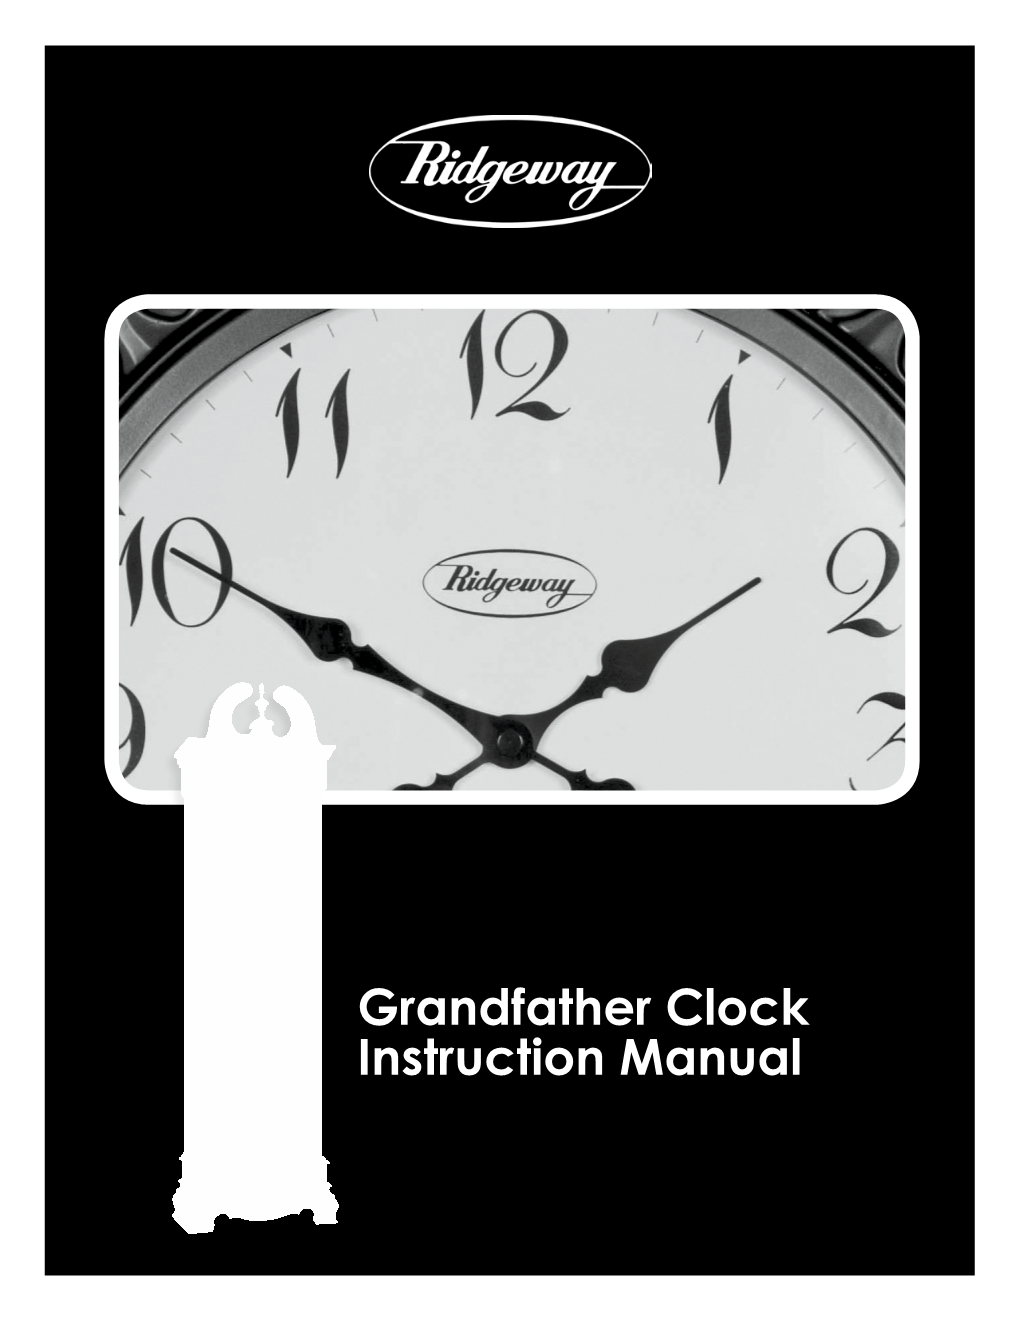 Grandfather Clock Instruction Manual English 1-13